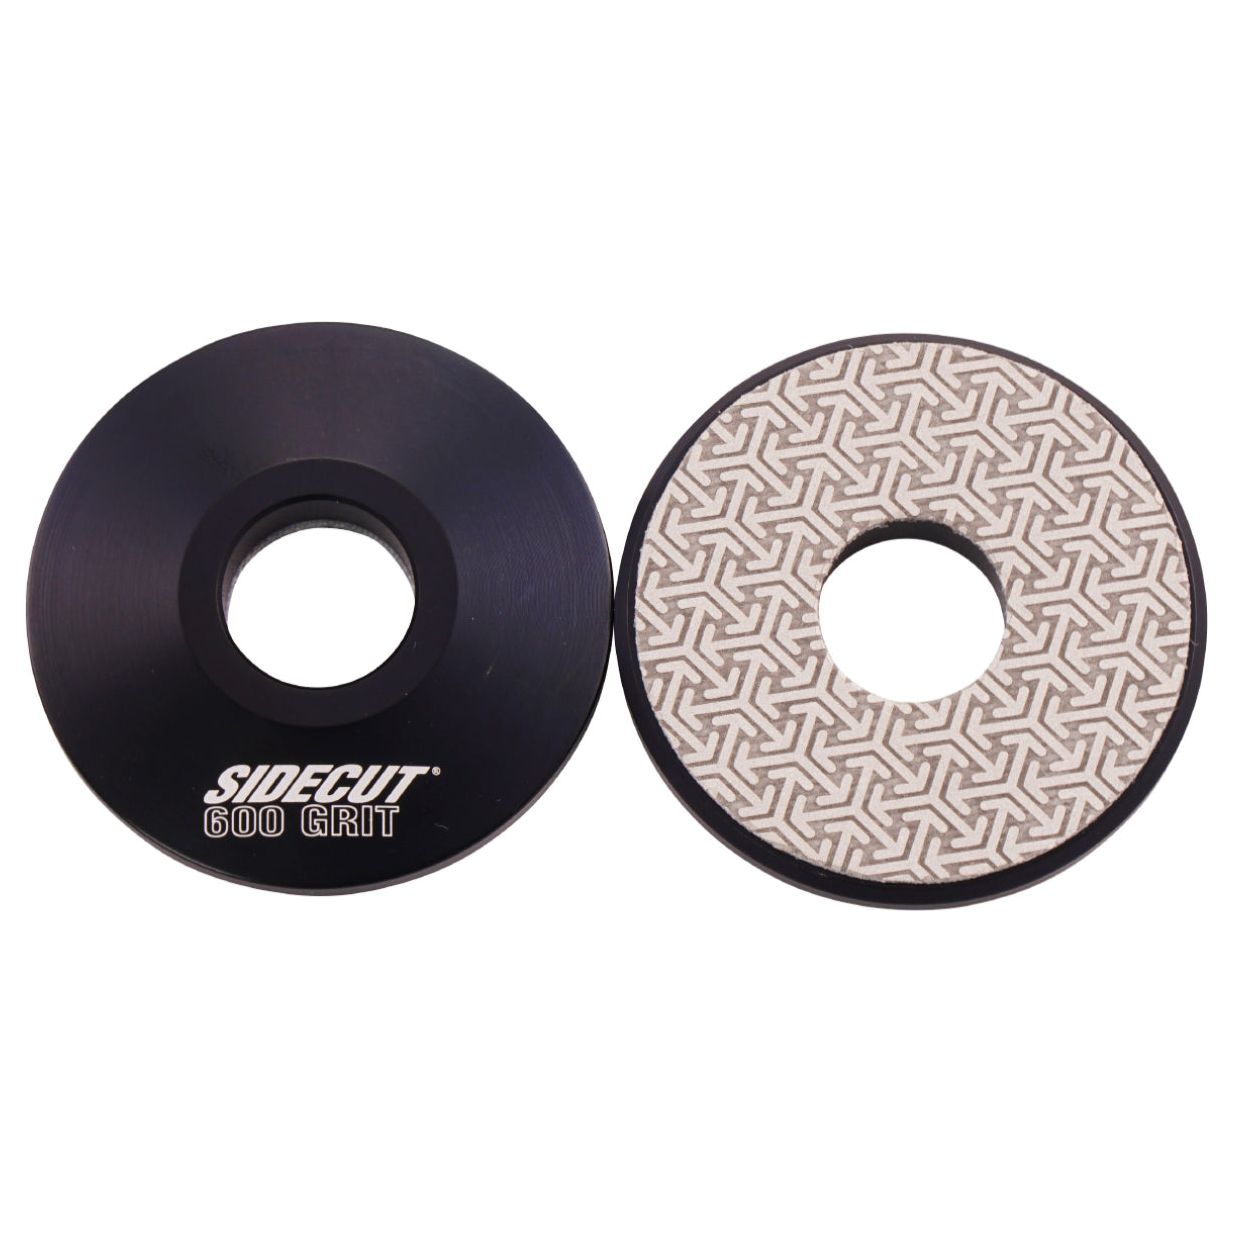 Sidecut Diamond Discs - used with Diamond Guides